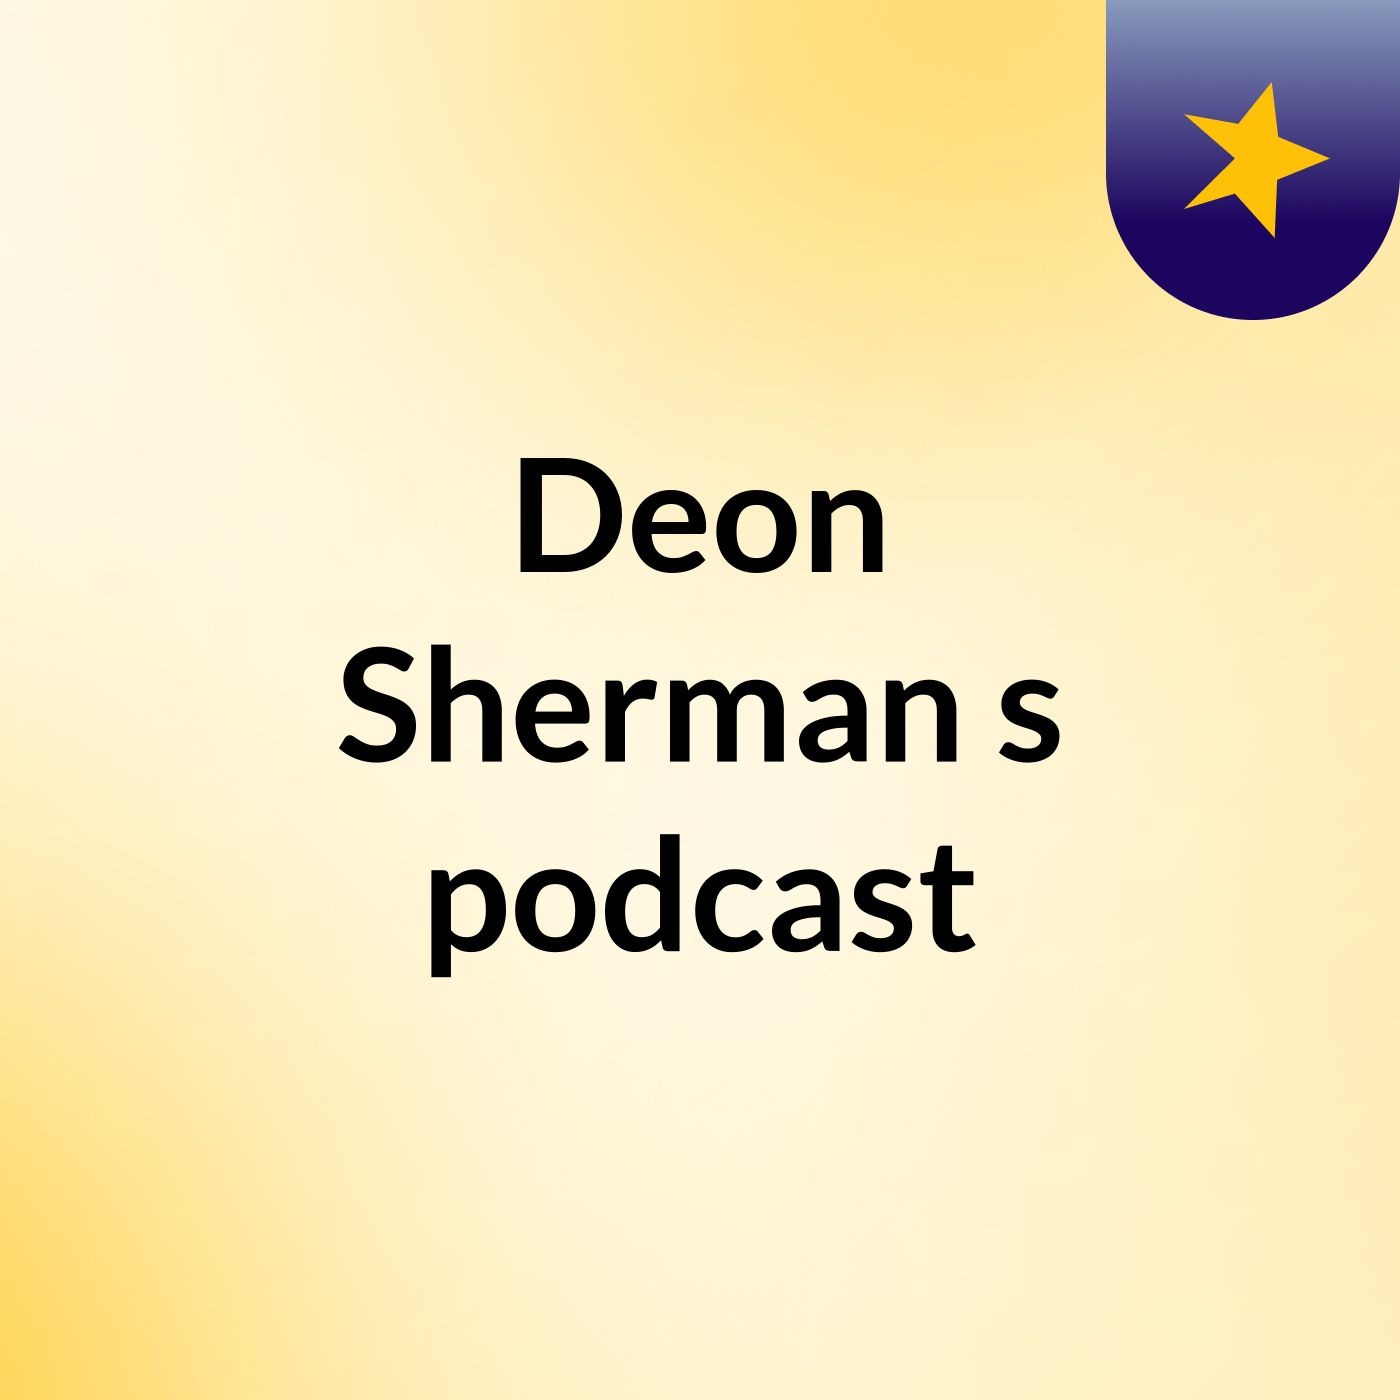 Deon Sherman's podcast